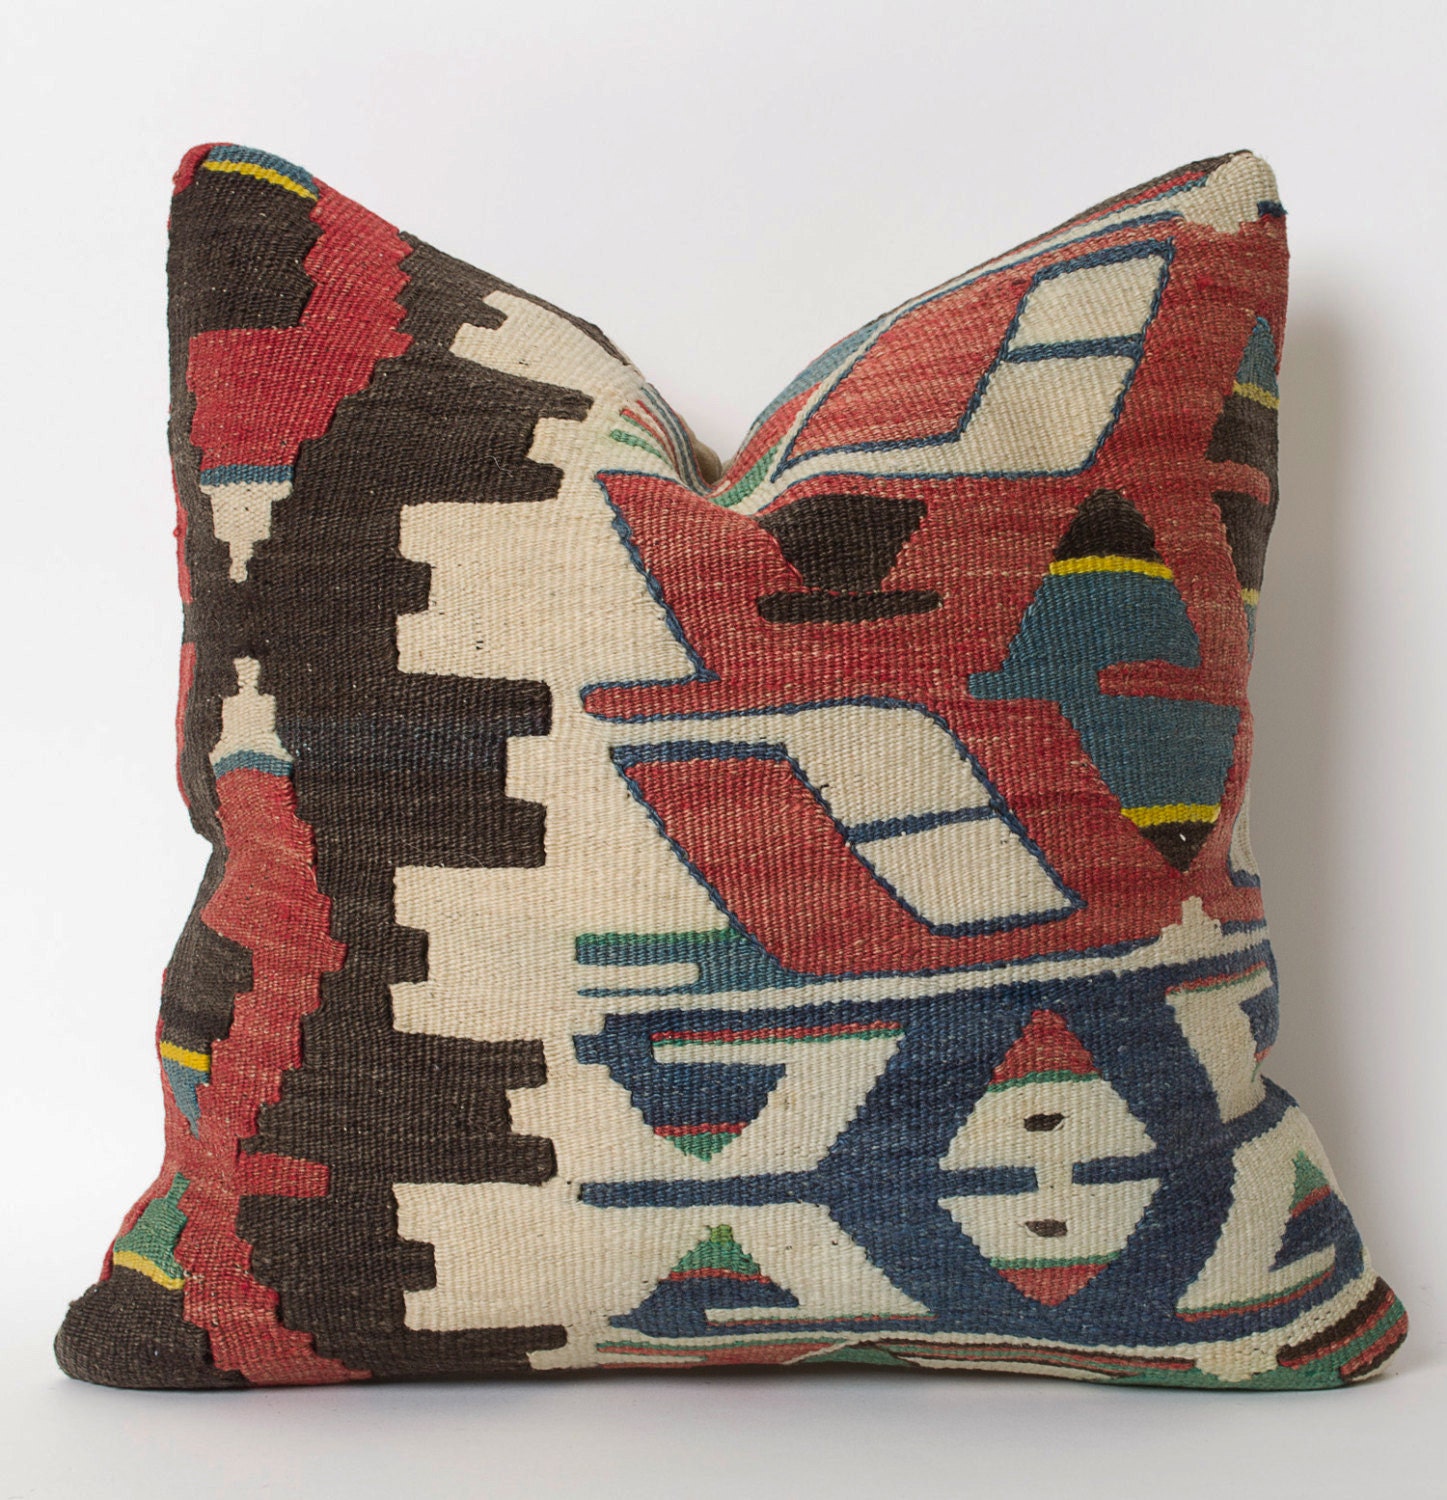 Boho bedroom kilim pillows scandinavian design ethnic cushions | Etsy